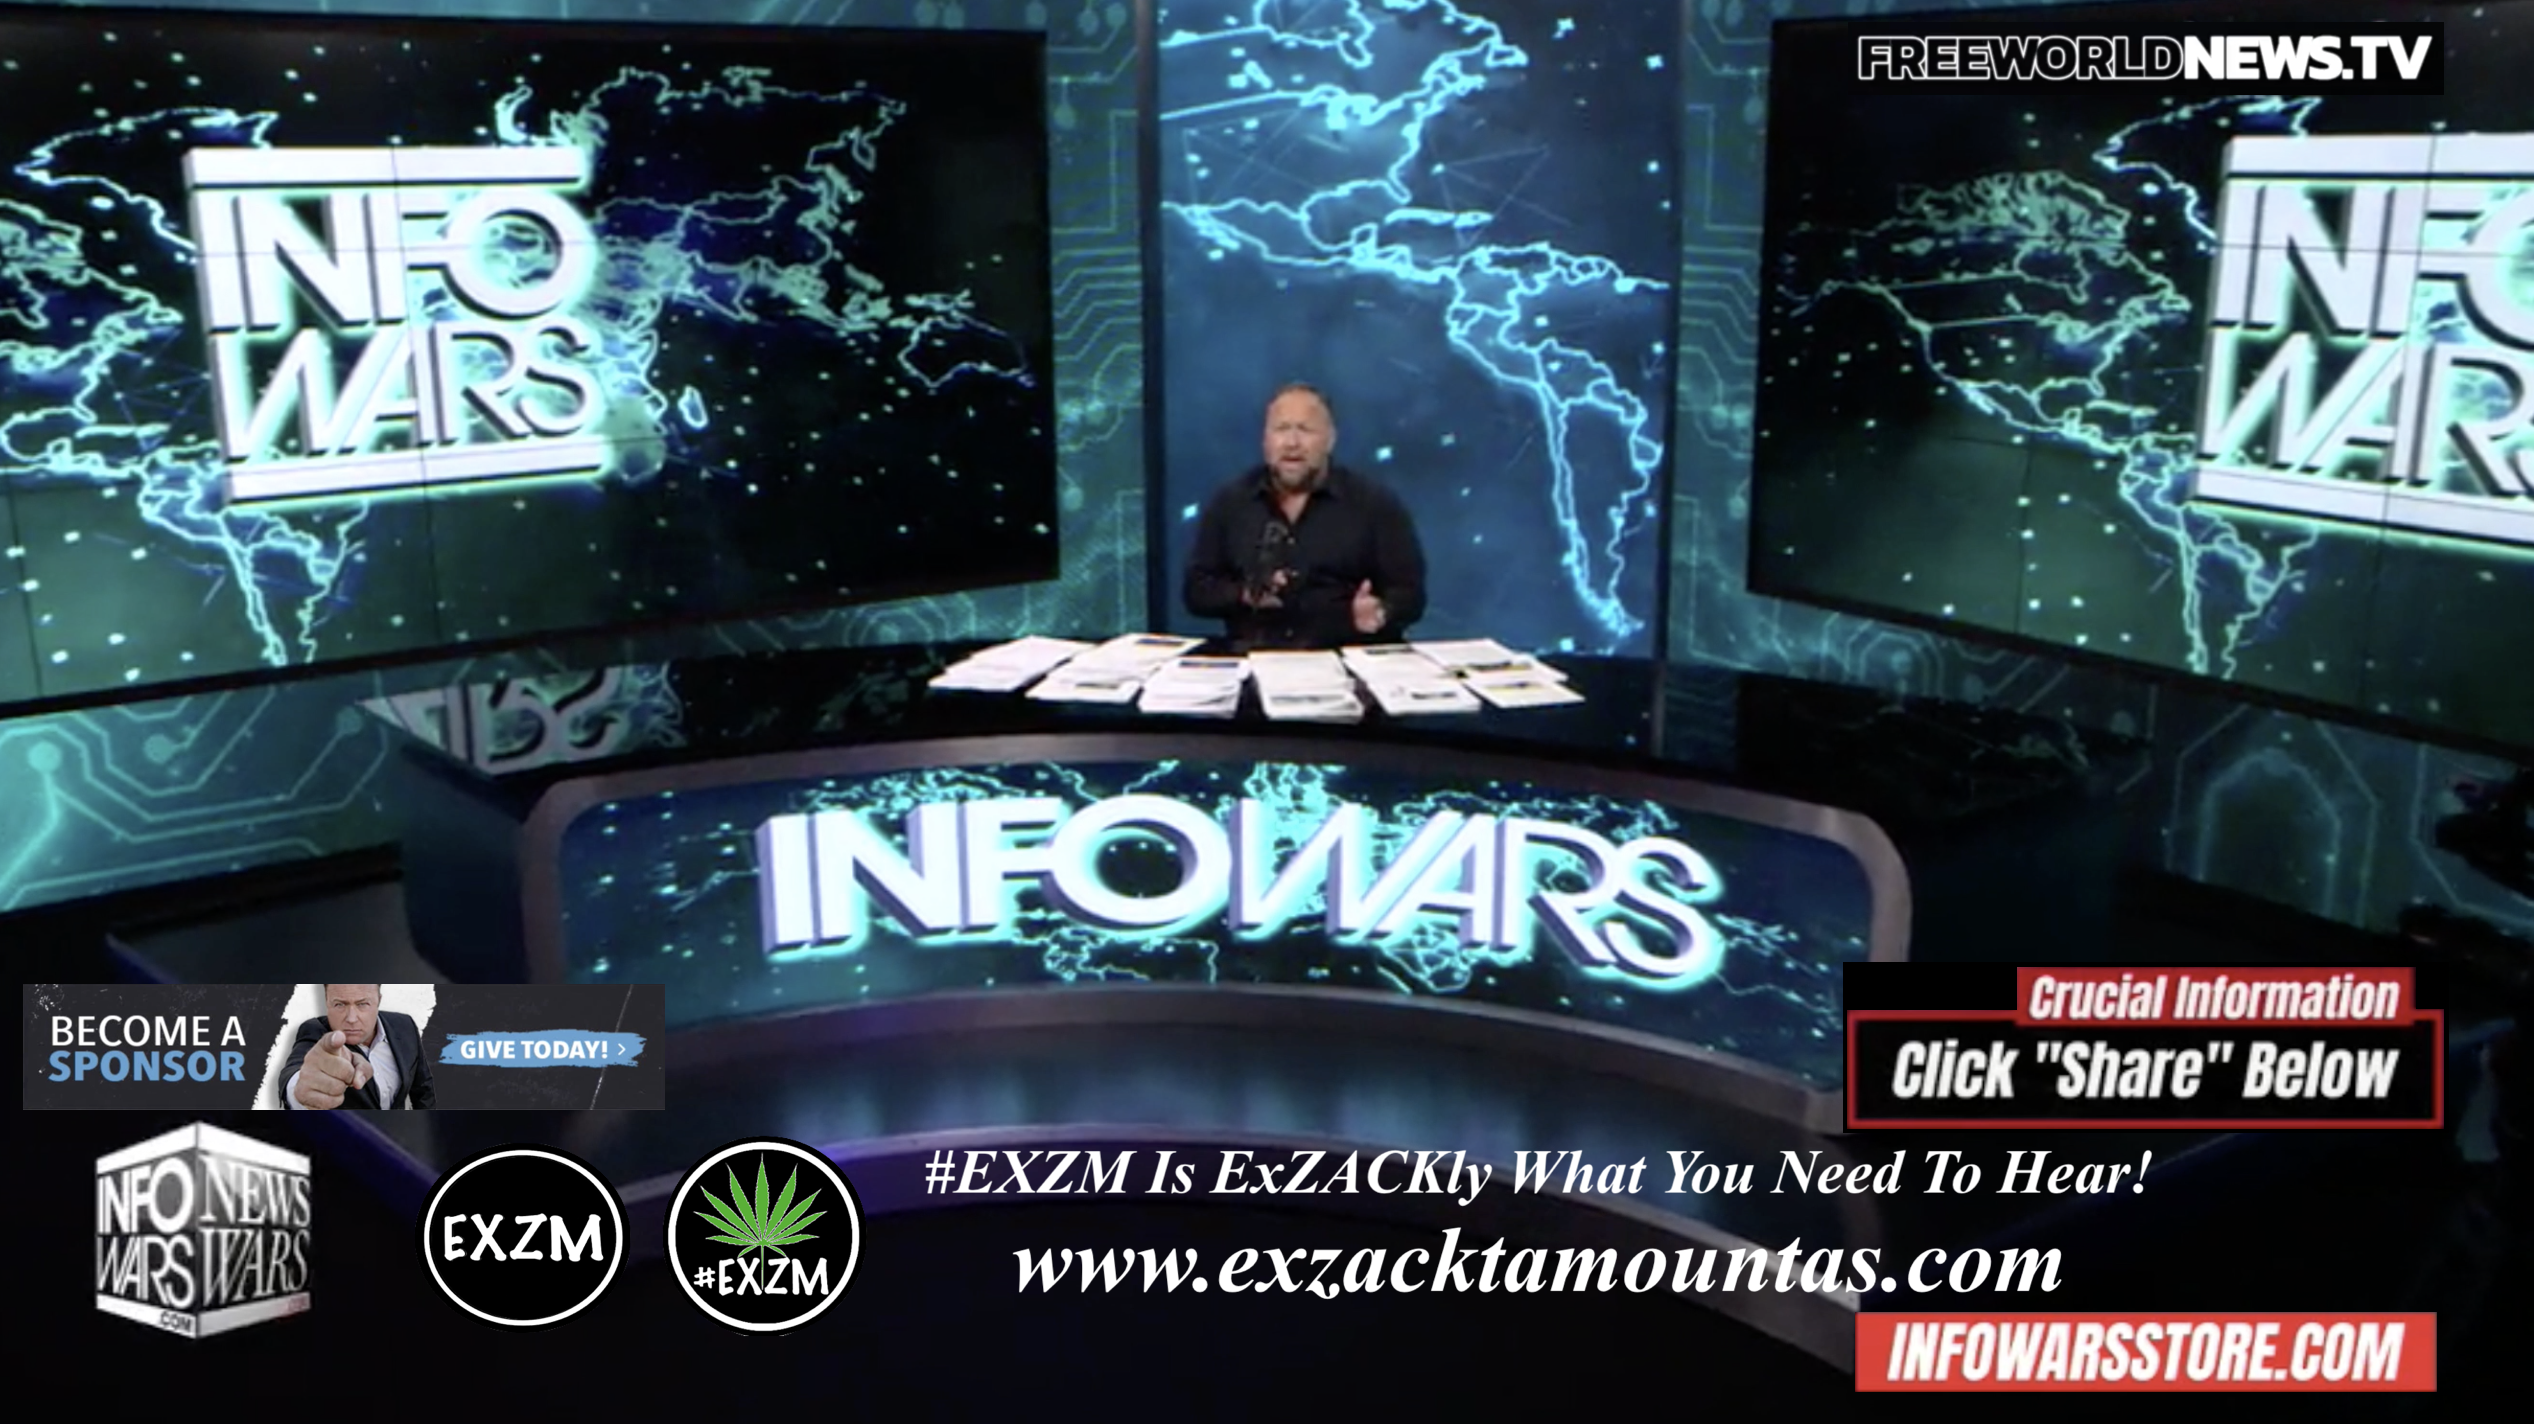 Alex Jones Live In Infowars Studio Free World News TV EXZM Zack Mount October 25th 2021 copy